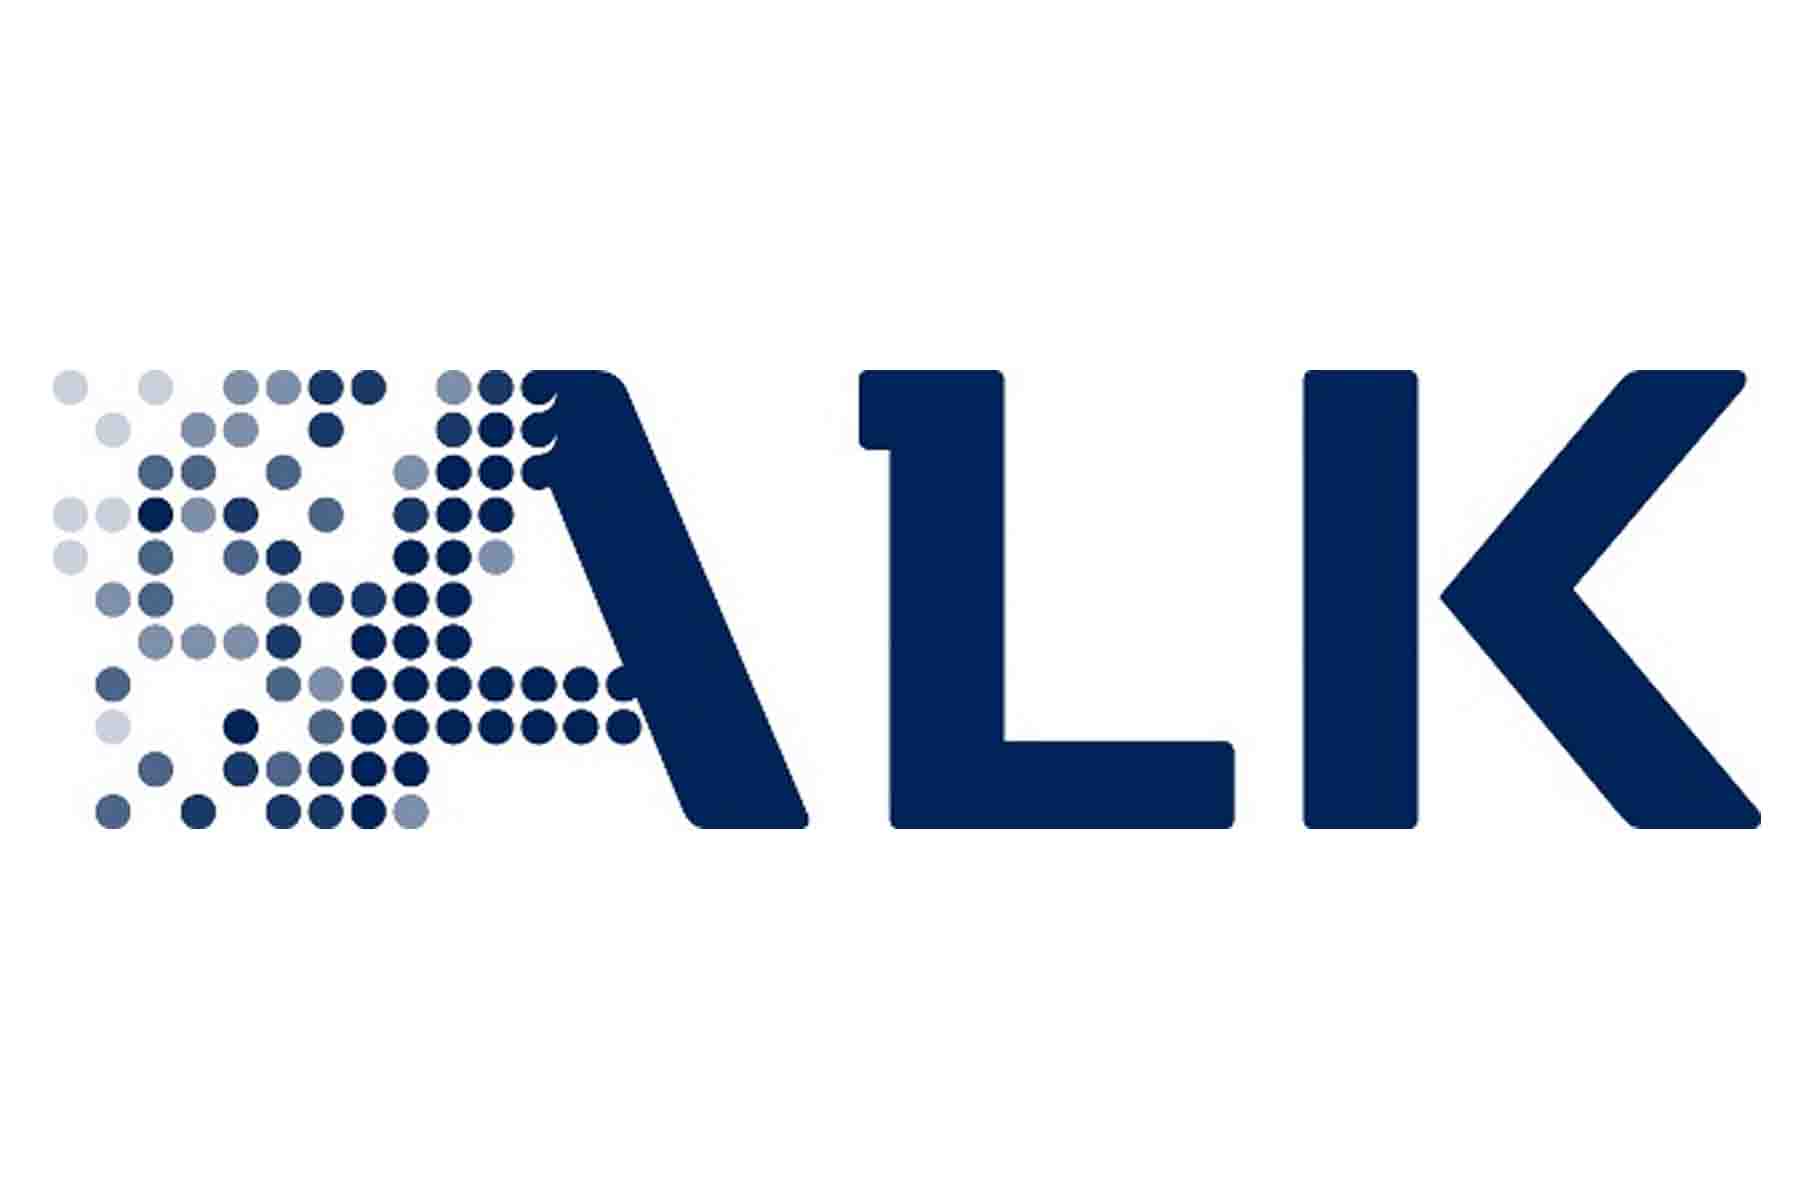 alk-abell-source-materials-laboratory-allergen-biomedical-source